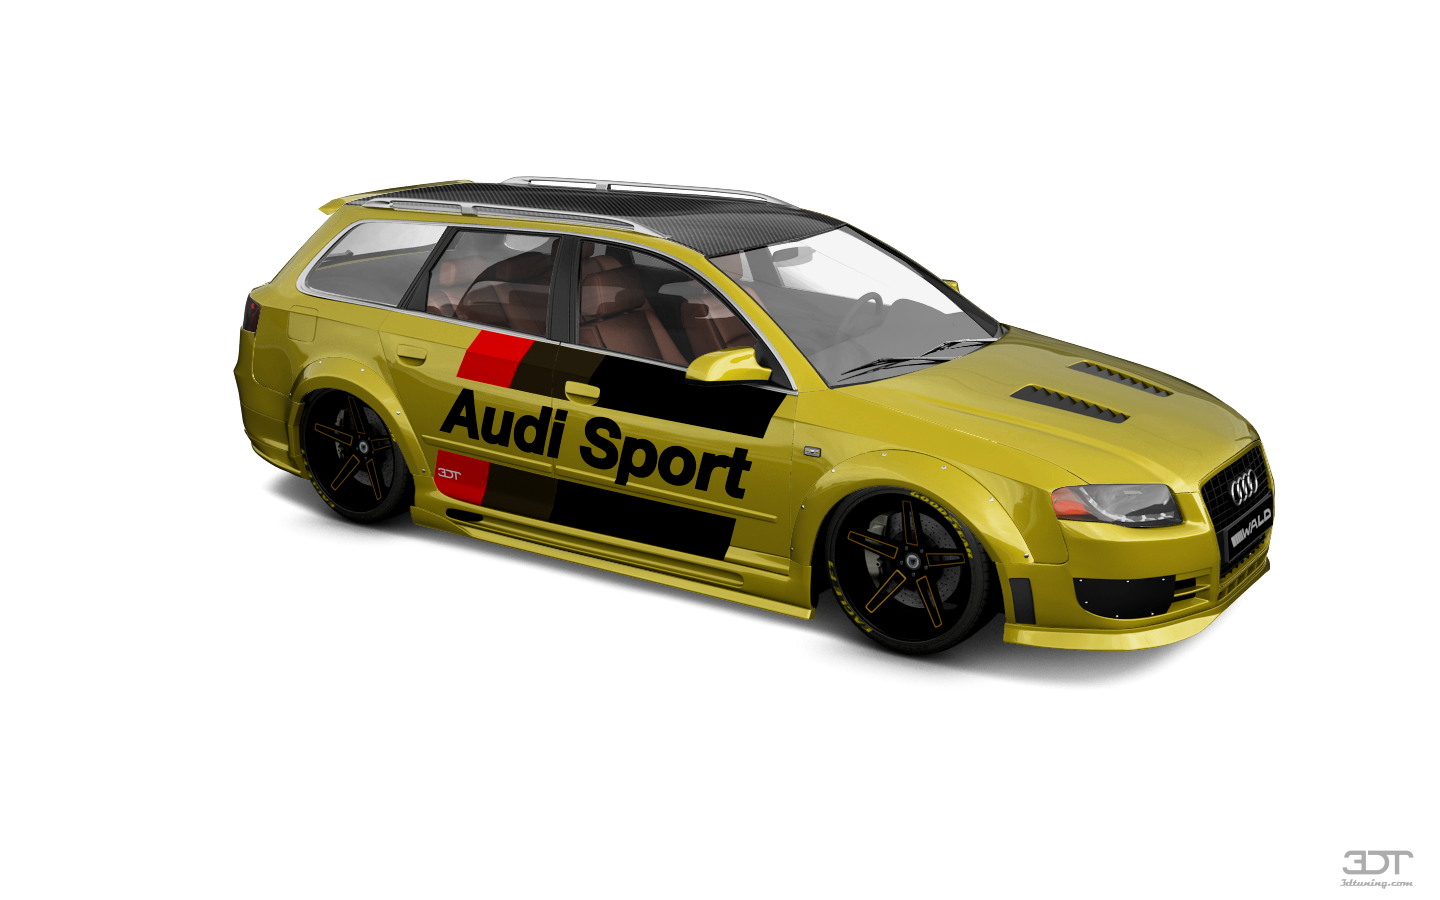 Audi A4 Avant 2006 tuning